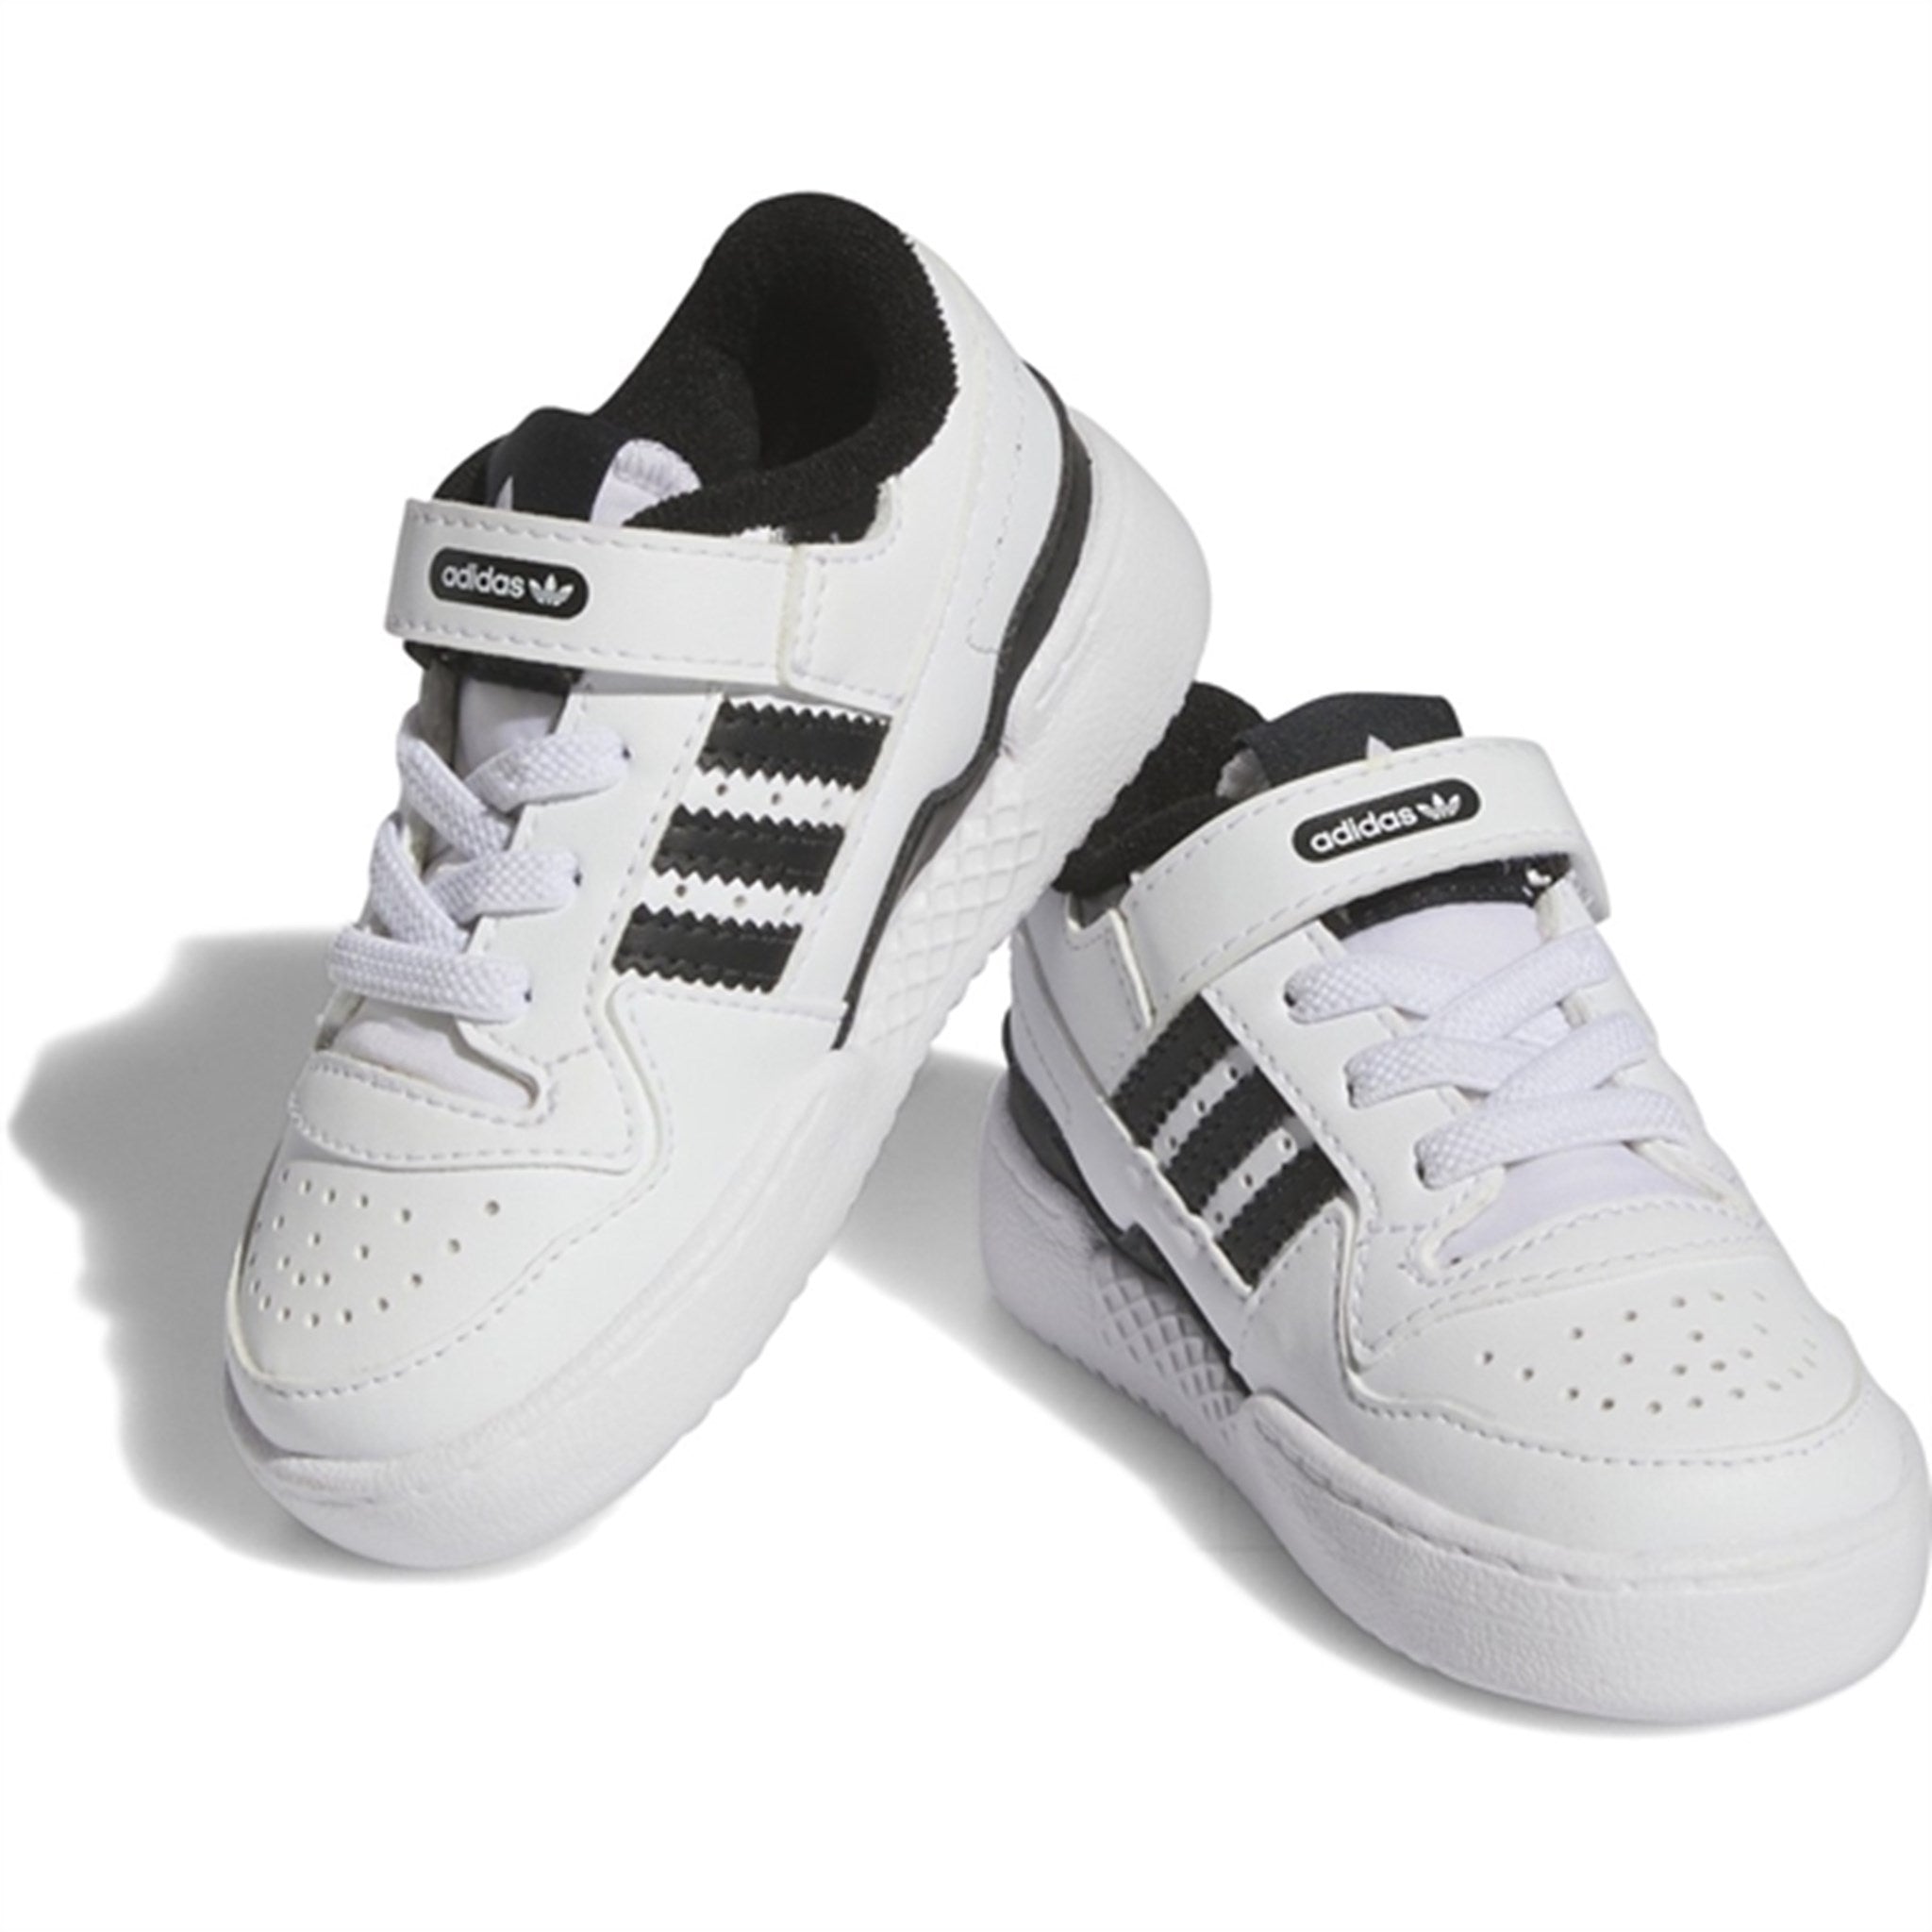 adidas Originals Forum Low Infant Sneakers Black/White 5